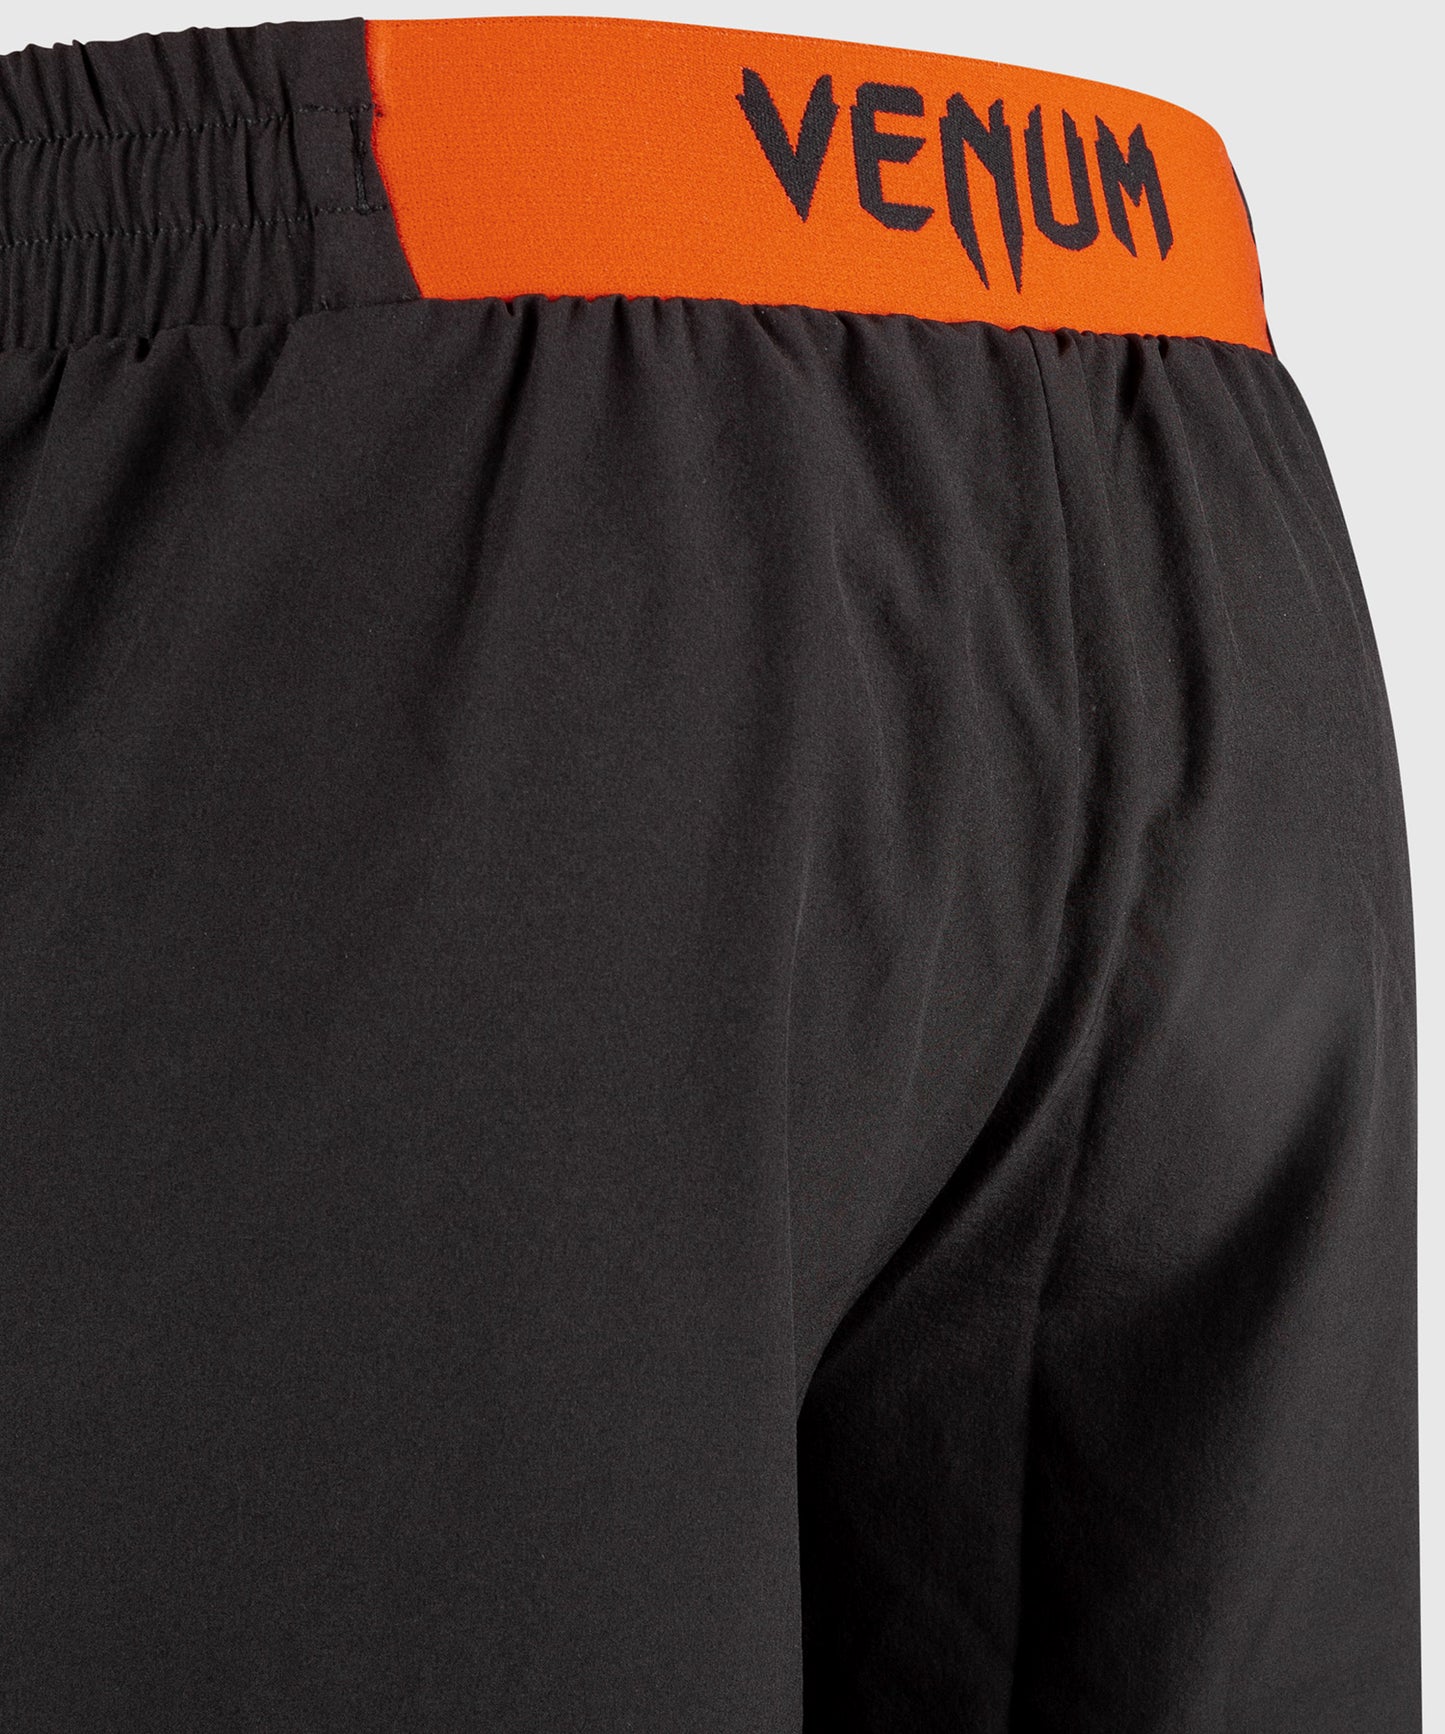 Venum Classic Training Shorts - Zwart/Rood